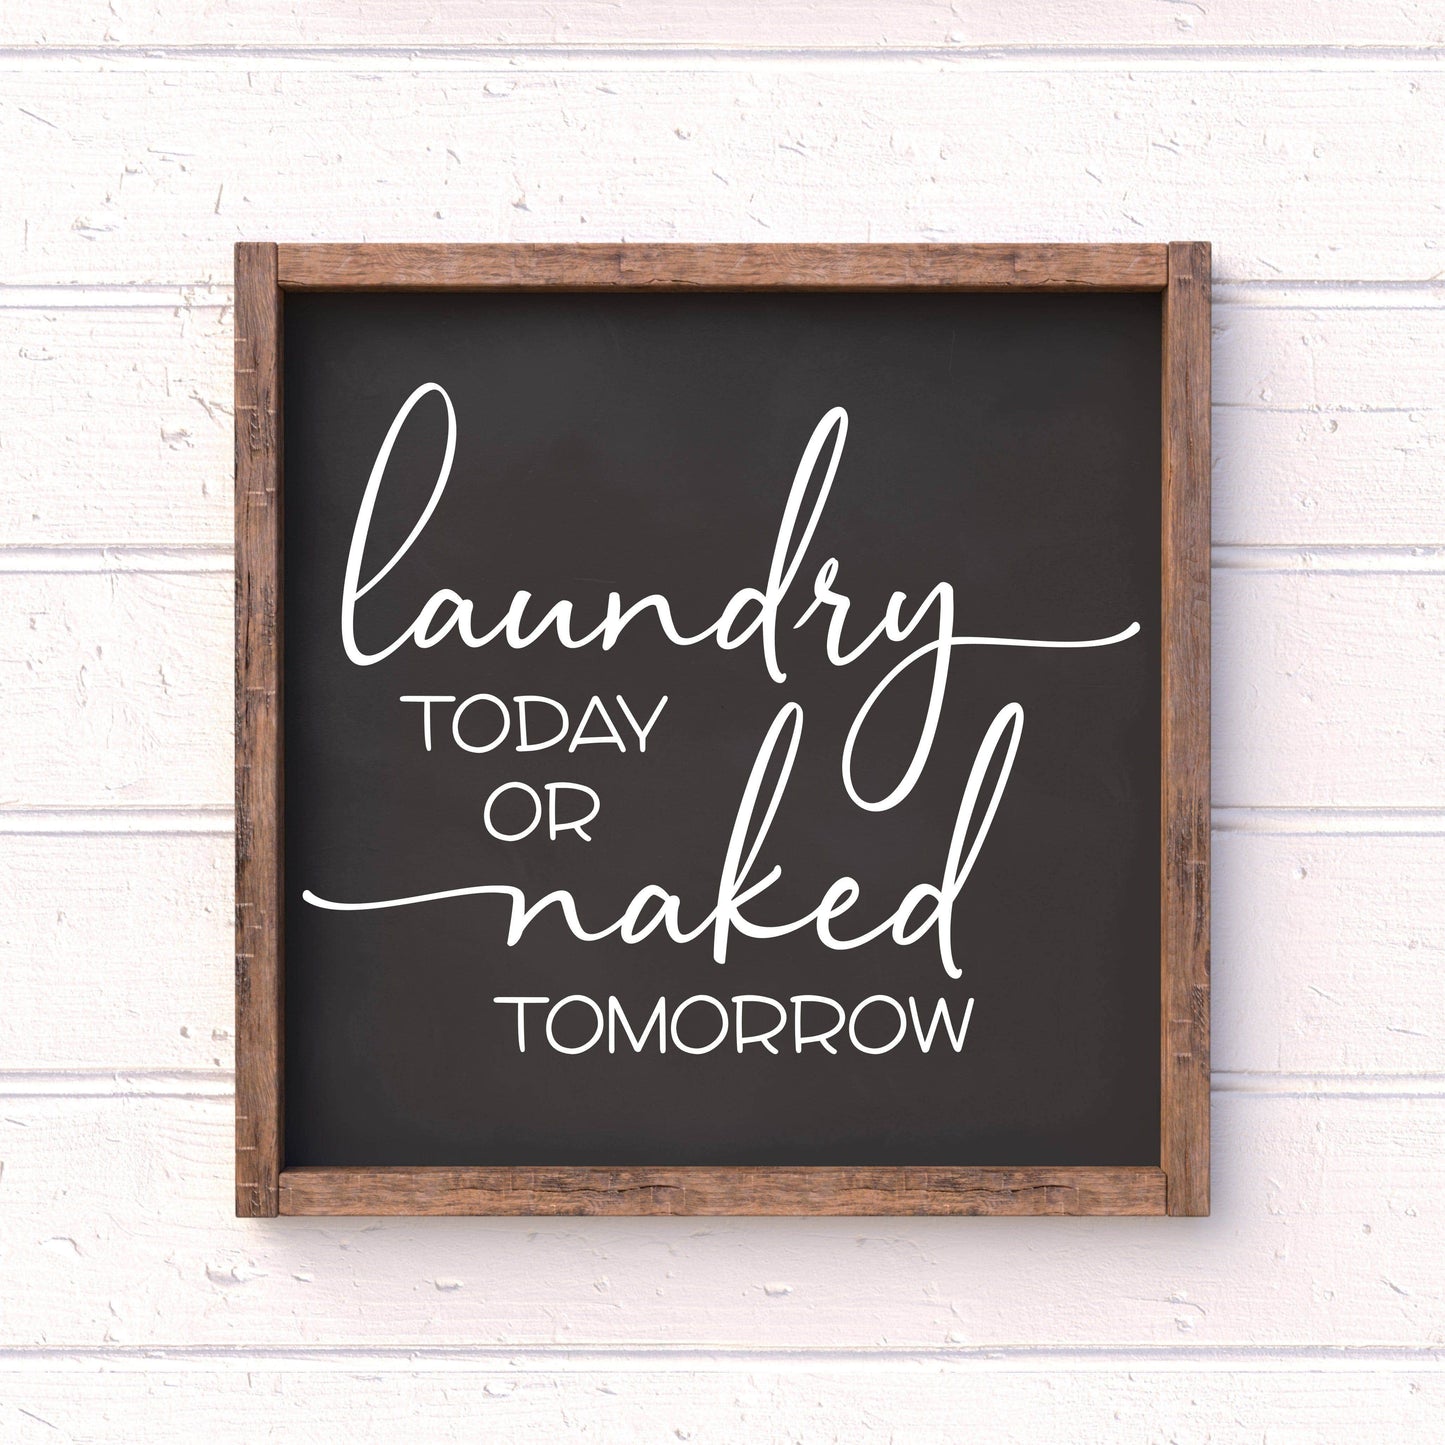 Laundry Today or Naked Tomorrow, framed laundry wood sign, laundry decor, home decor